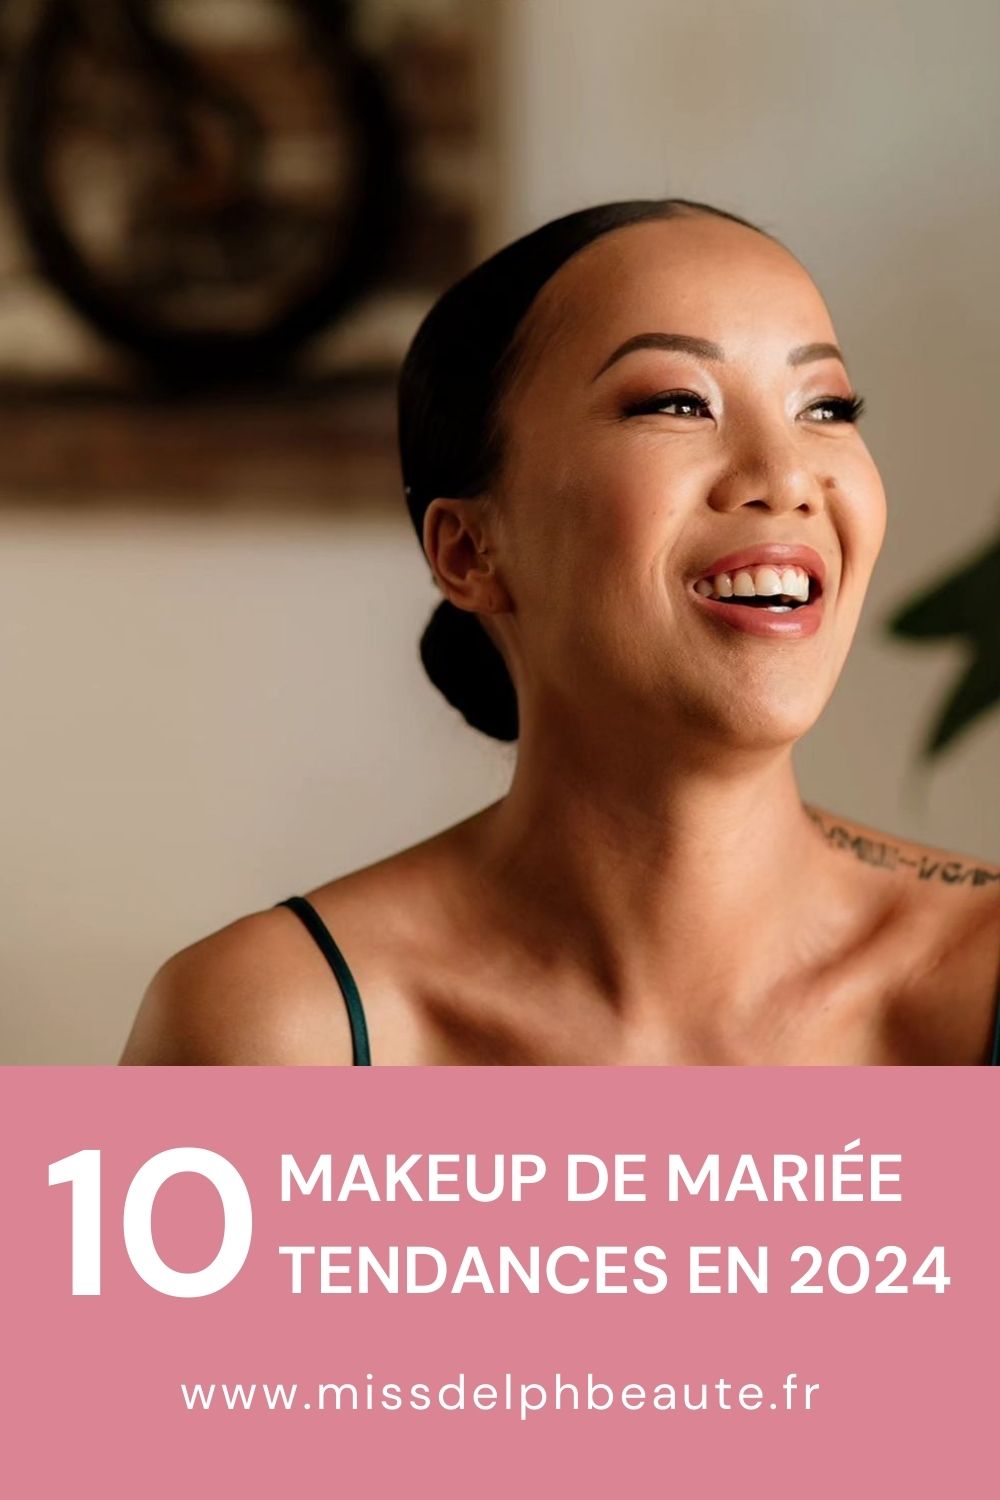 10 makeup de mariée tendances en 2024